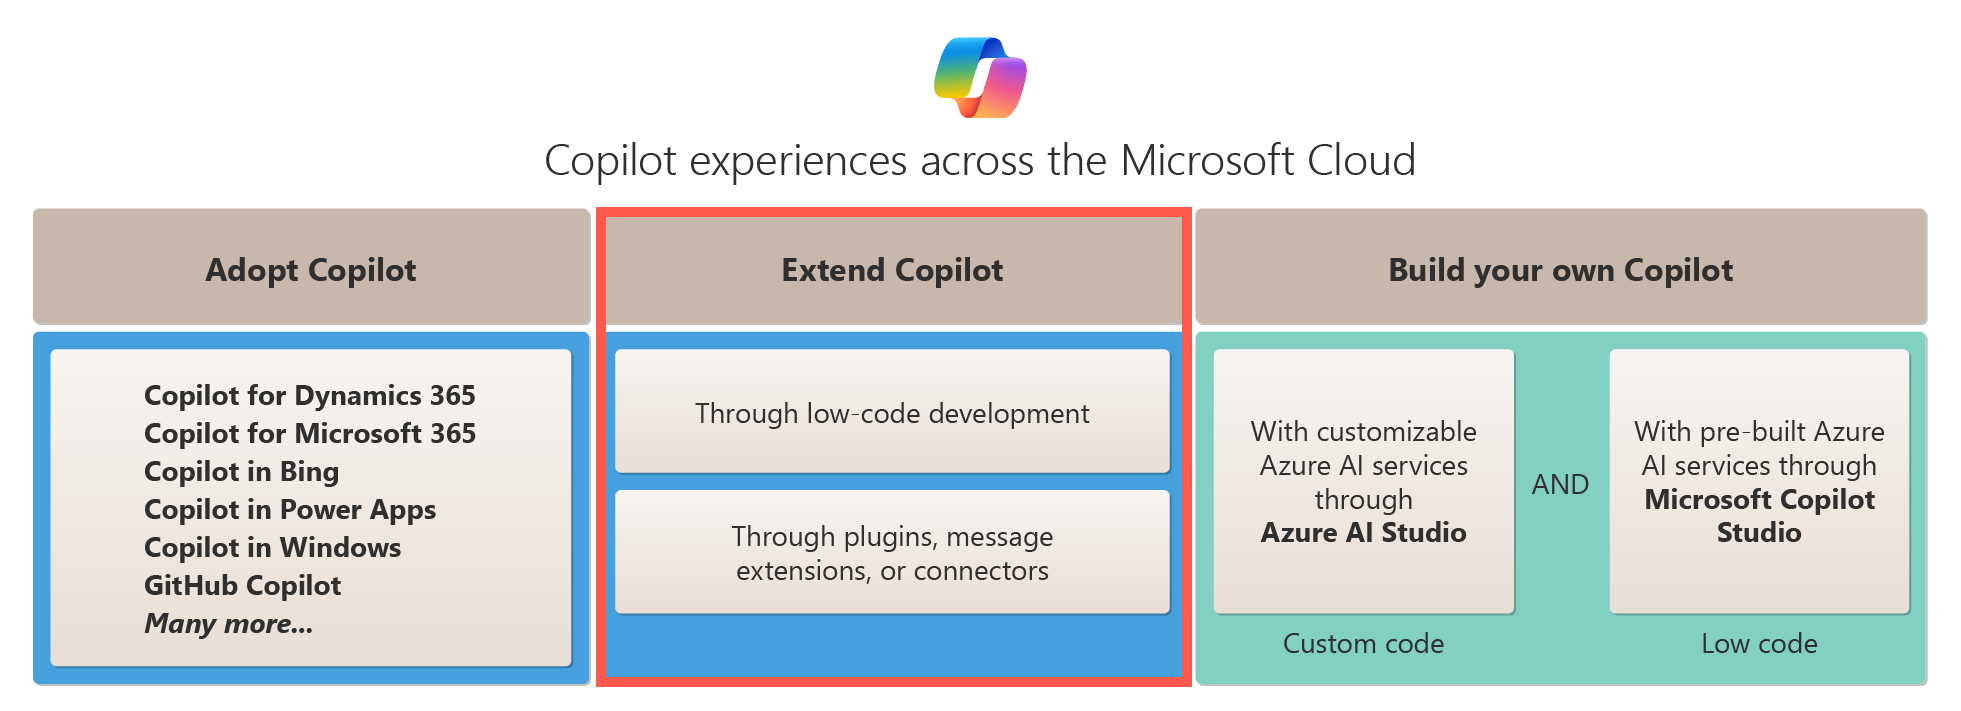 Microsoft Cloud 全体での Copilot の拡張オプションを示す図。